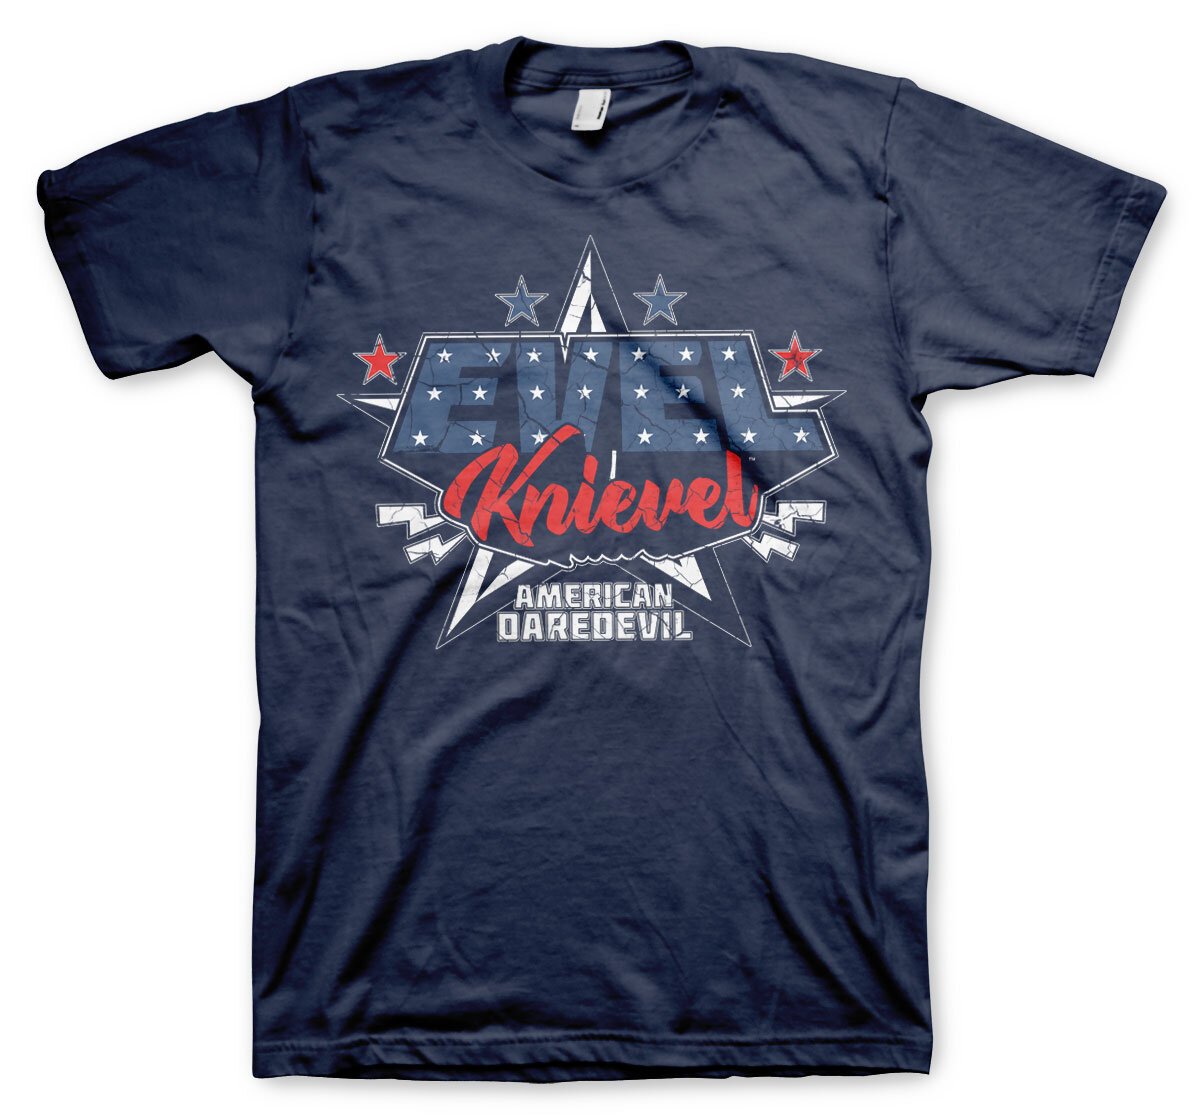 Evel Knievel - American Daredevil T-Shirt